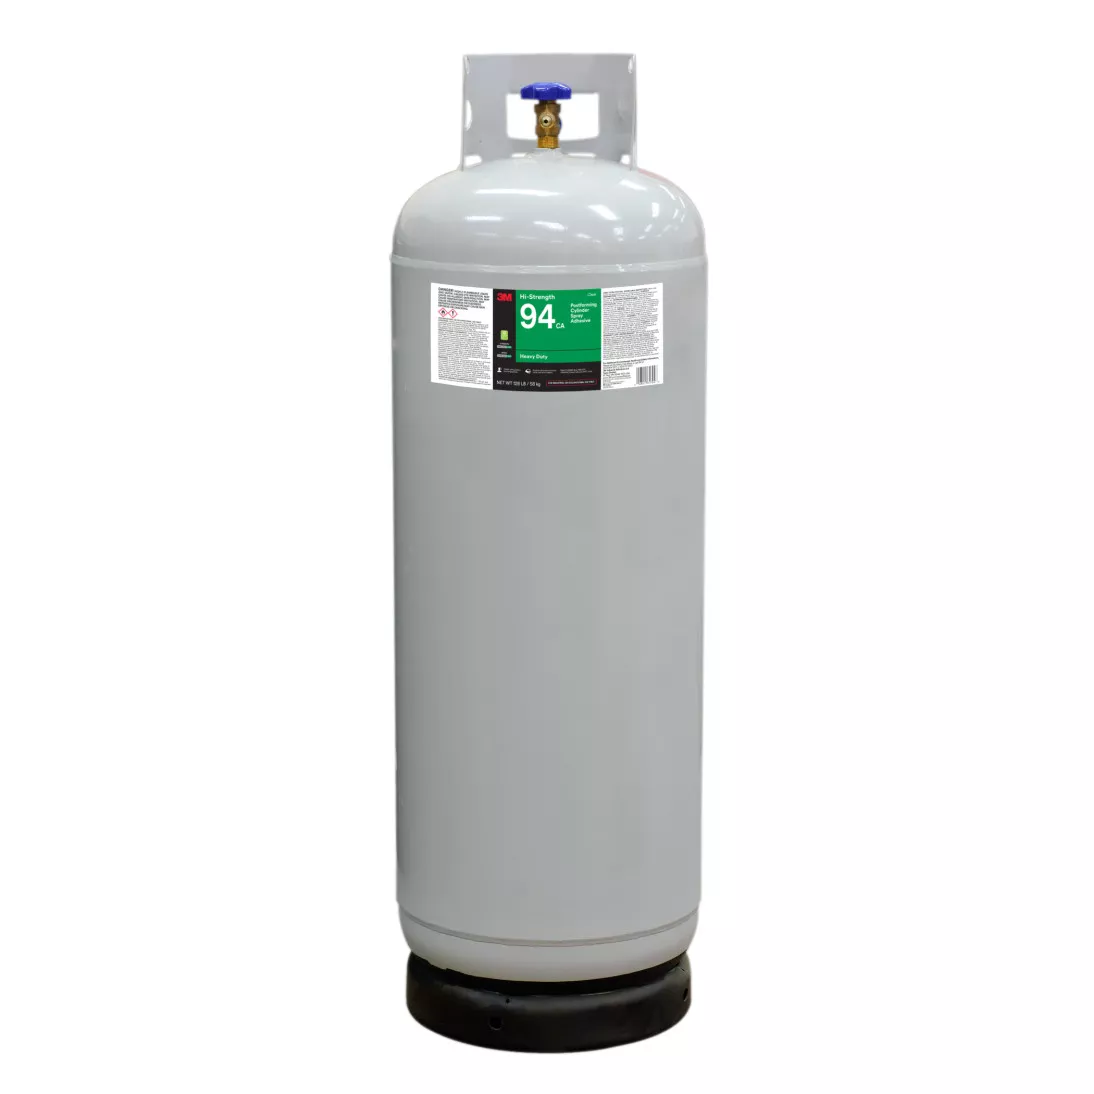 3M™ Hi-Strength Postforming 94 CA Cylinder Spray Adhesive, Clear,
Intermediate Cylinder (Net Wt 128 lb)